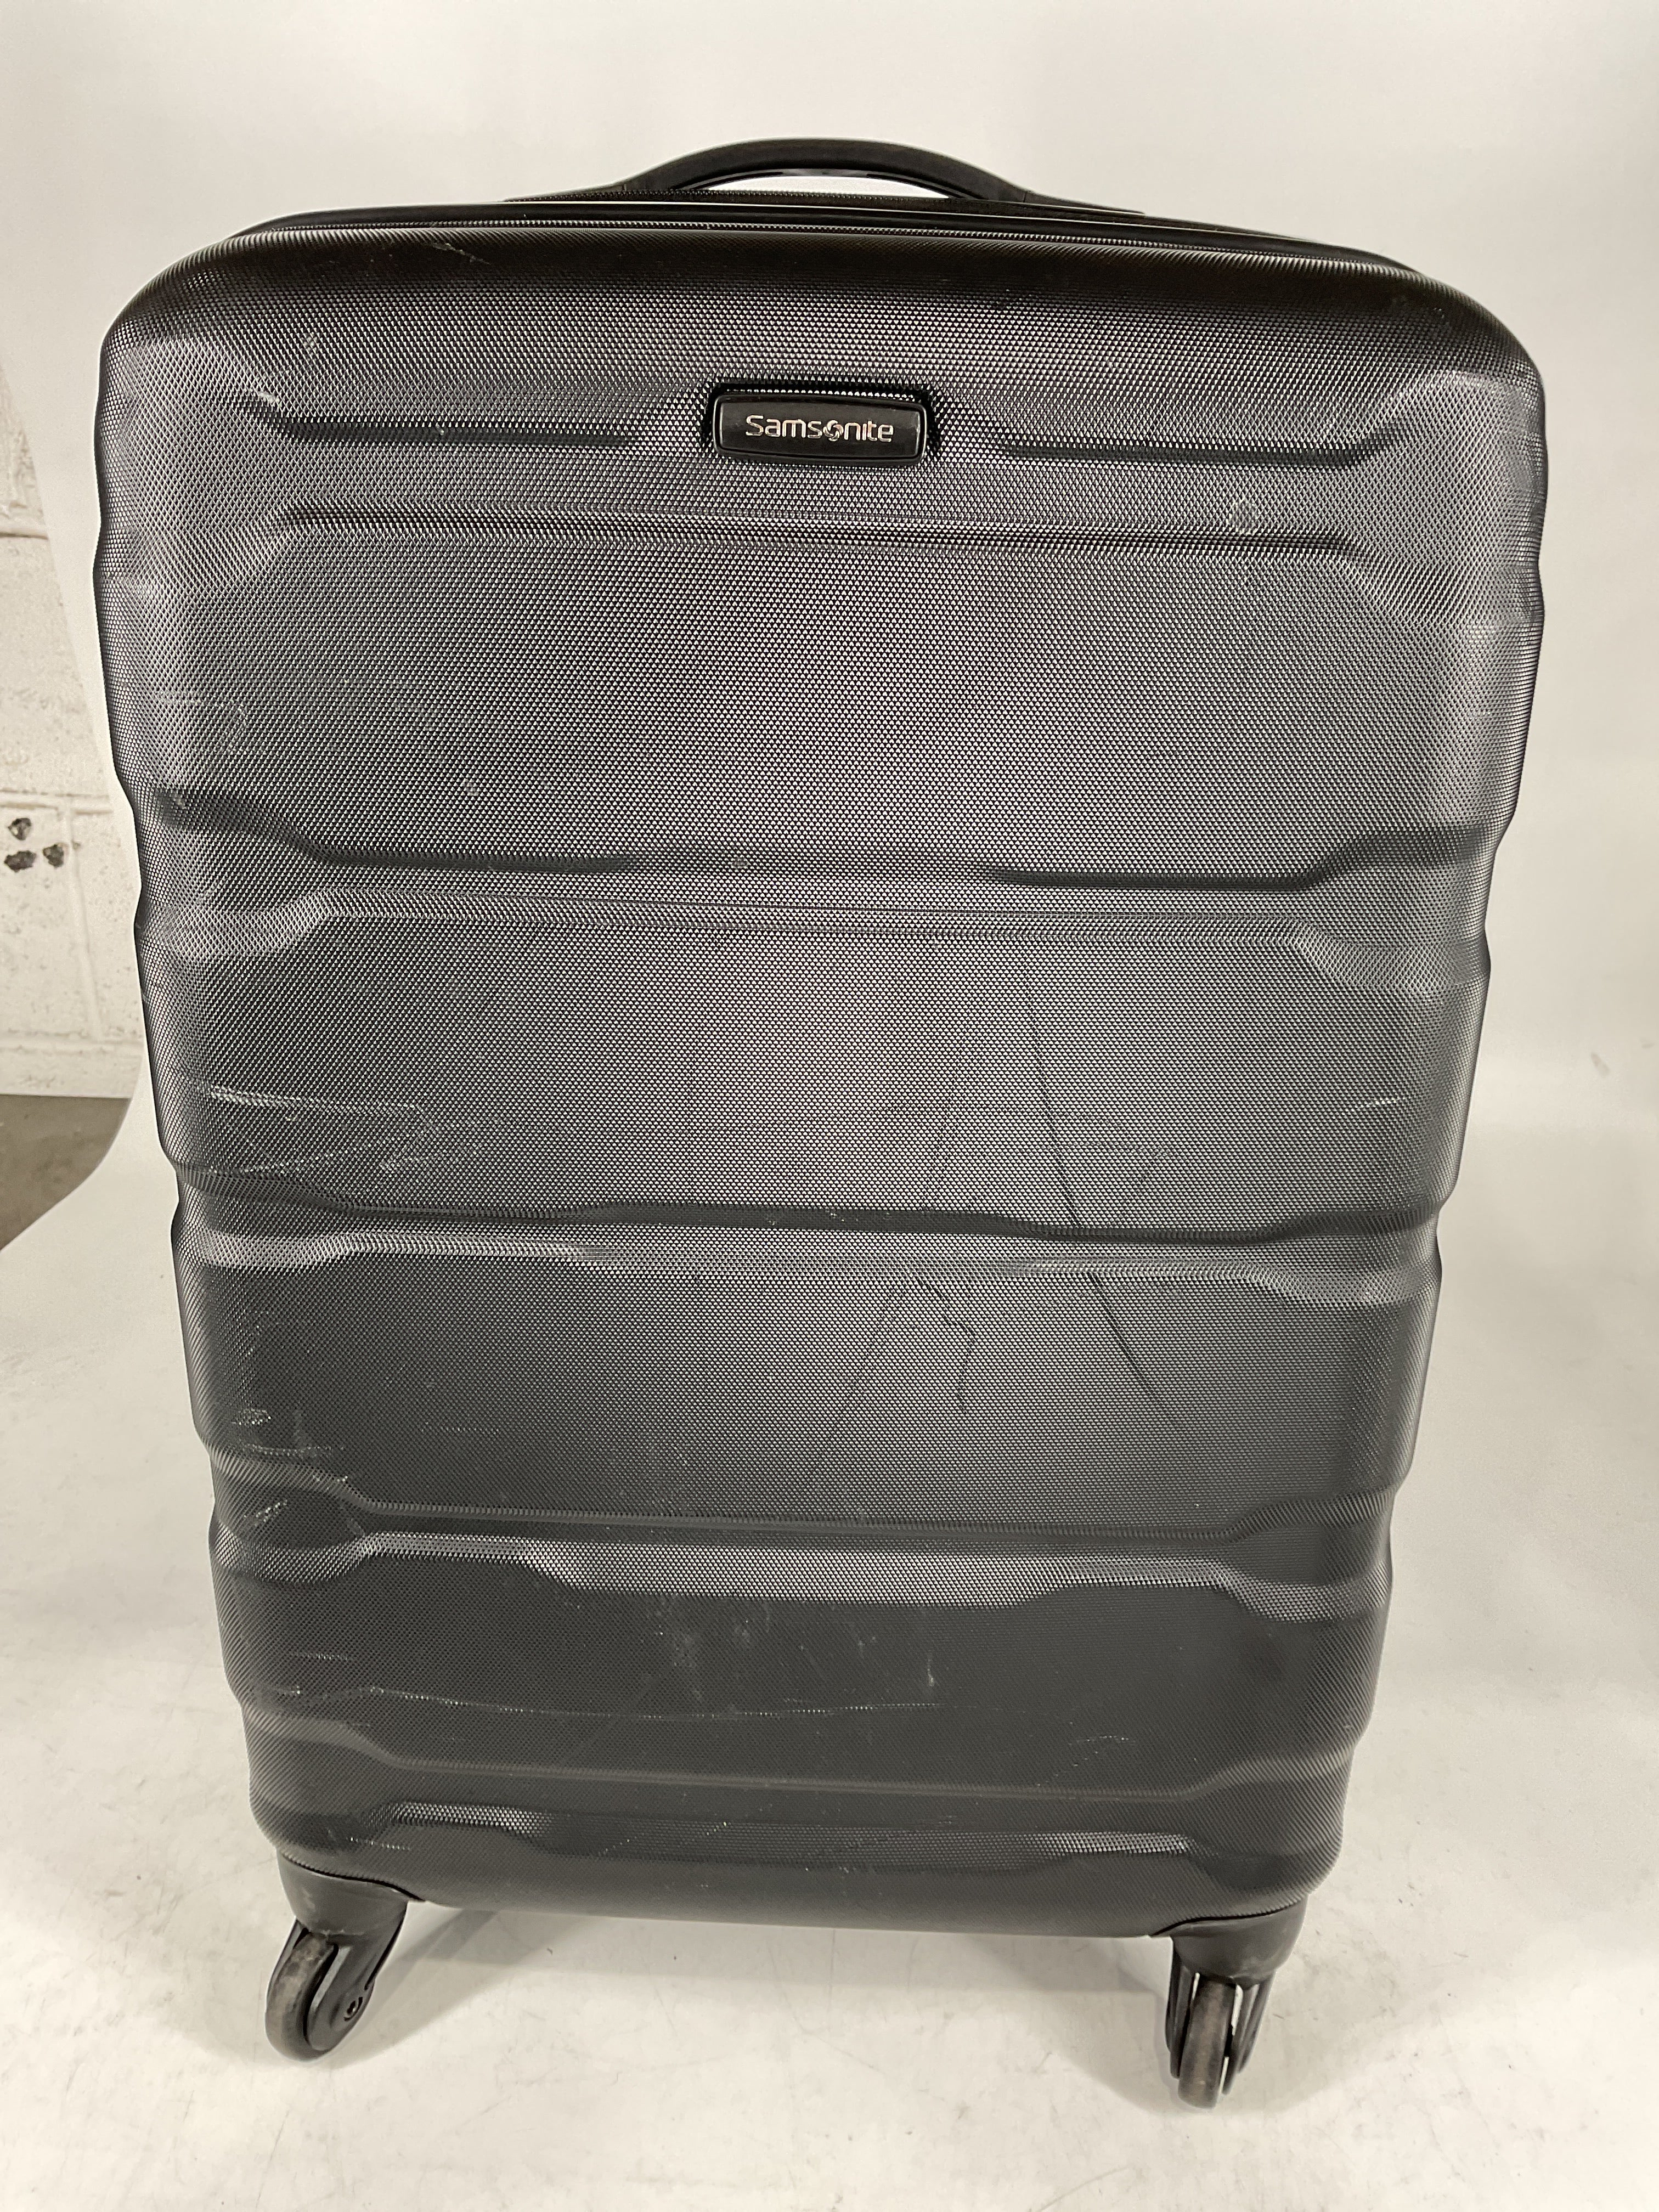 Samsonite Omni Pc Hardside Expandable Luggage with Spinner Wheels U5